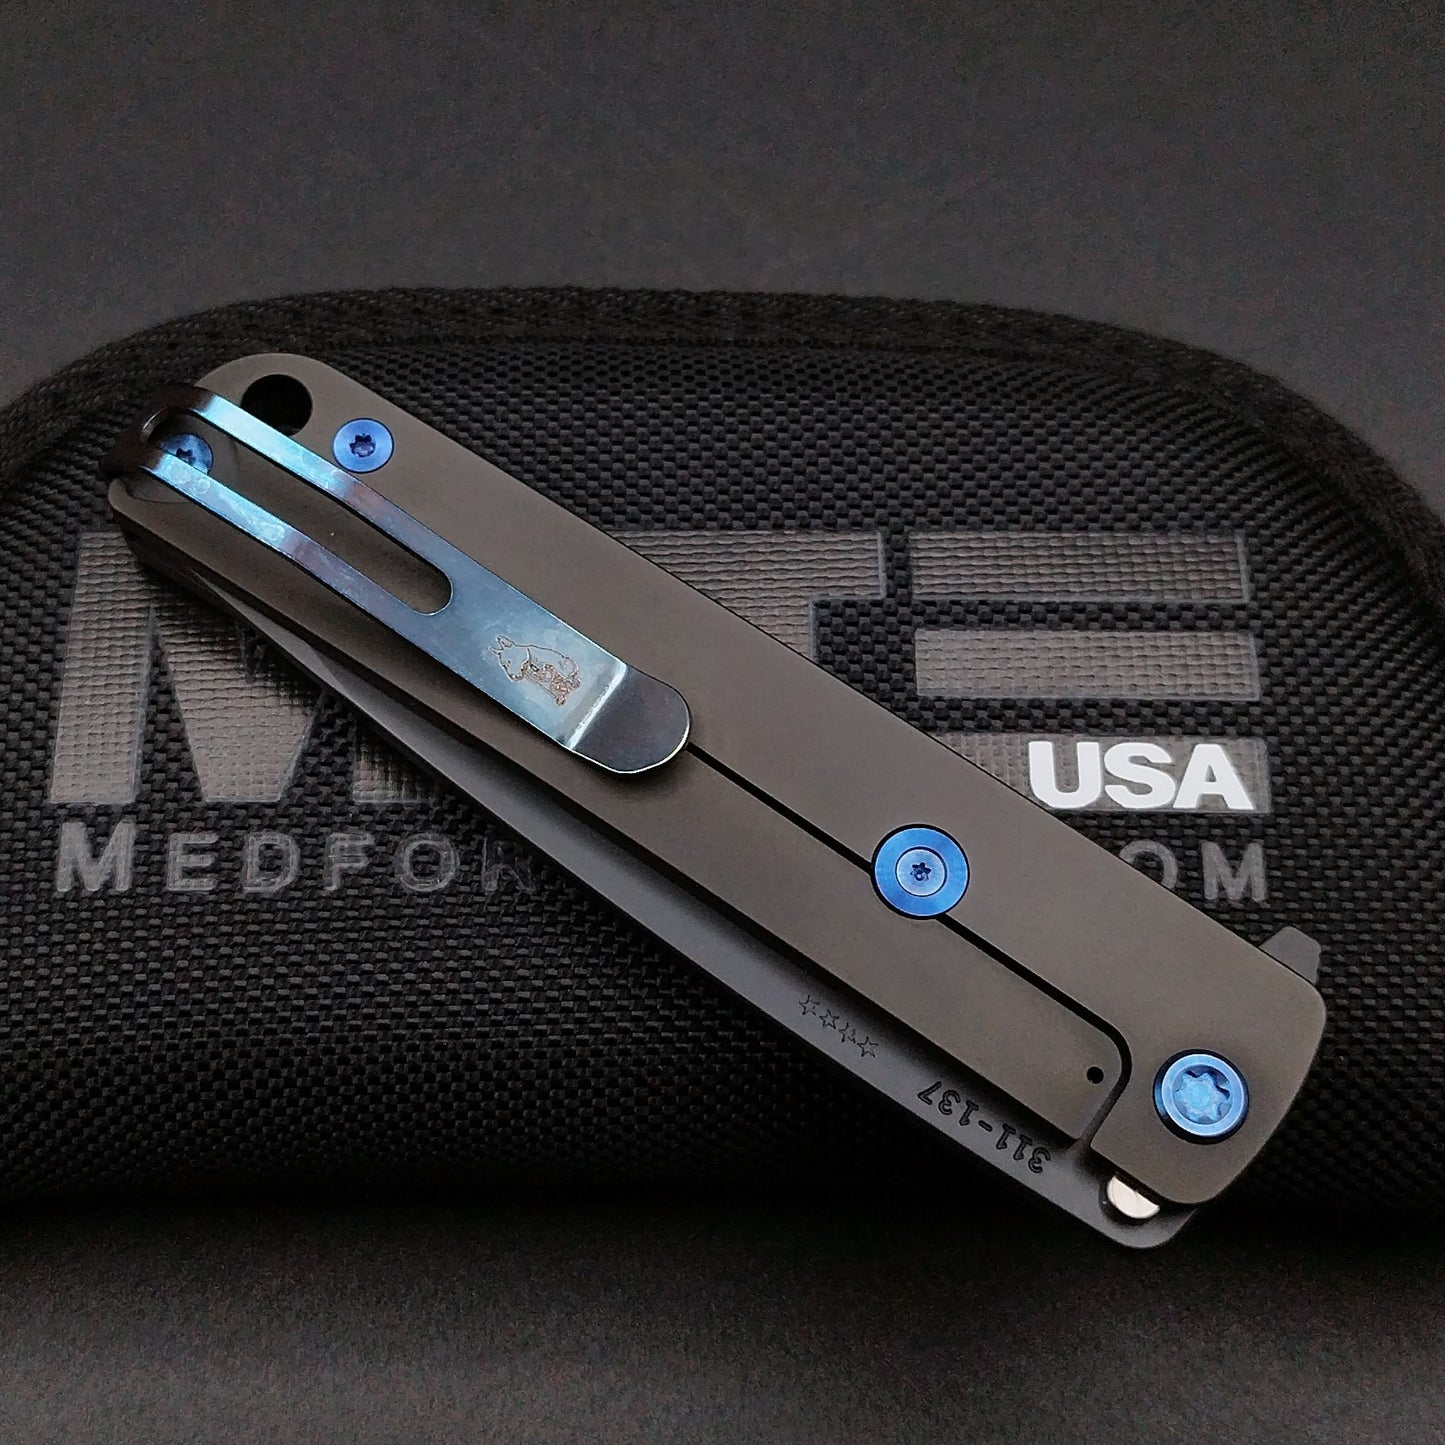 Medford M-48 Black with Blue Hardware 4